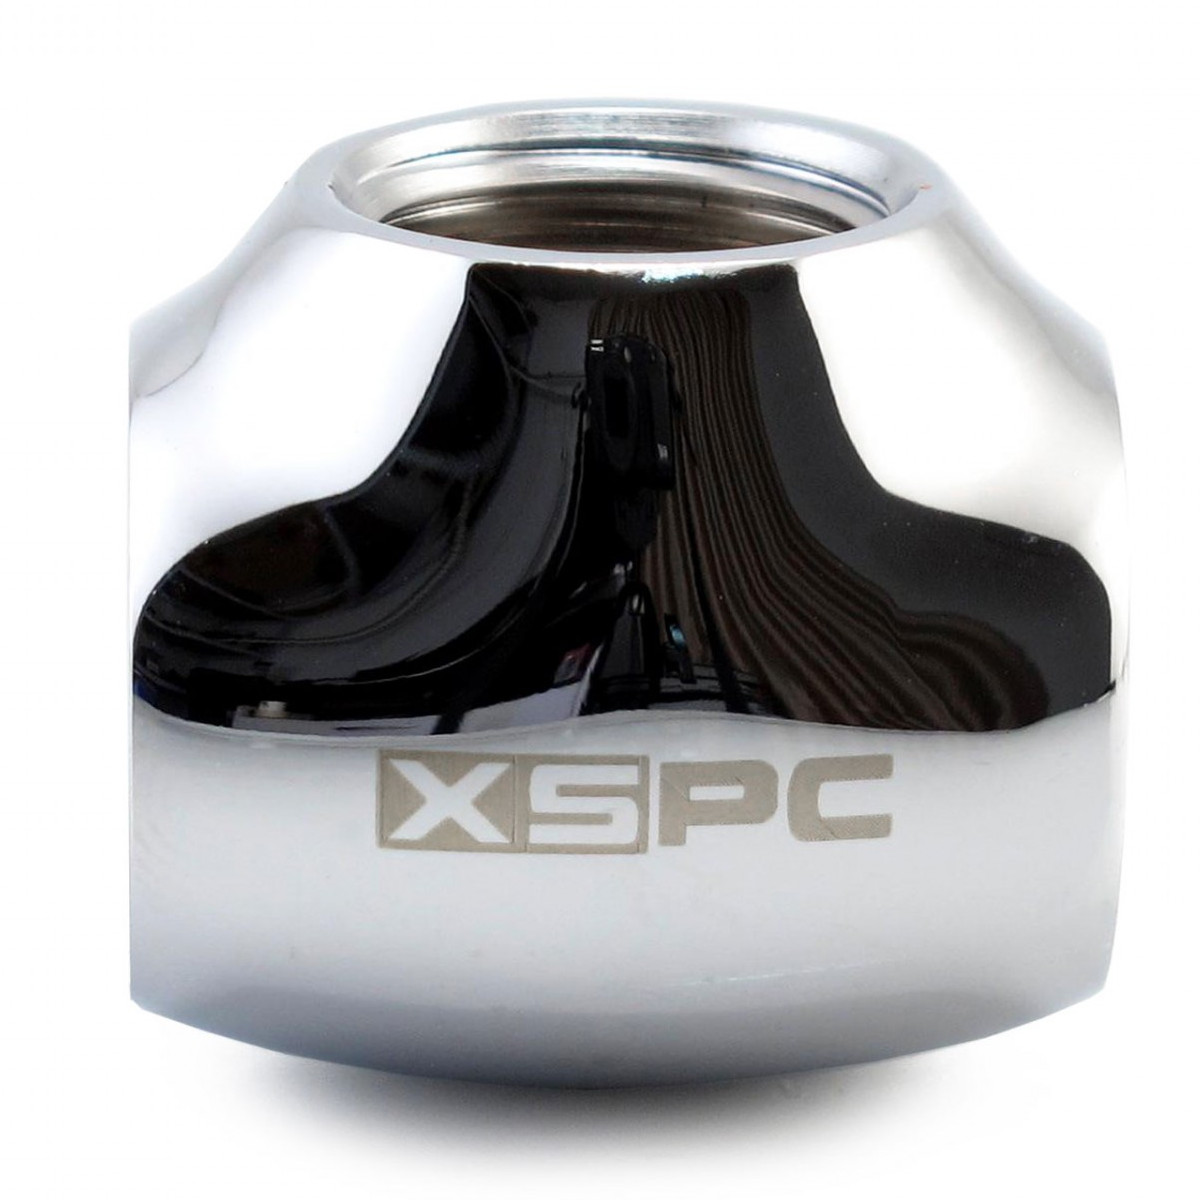 XSPC - XSPC G1/4 T Fitting (Chrome)